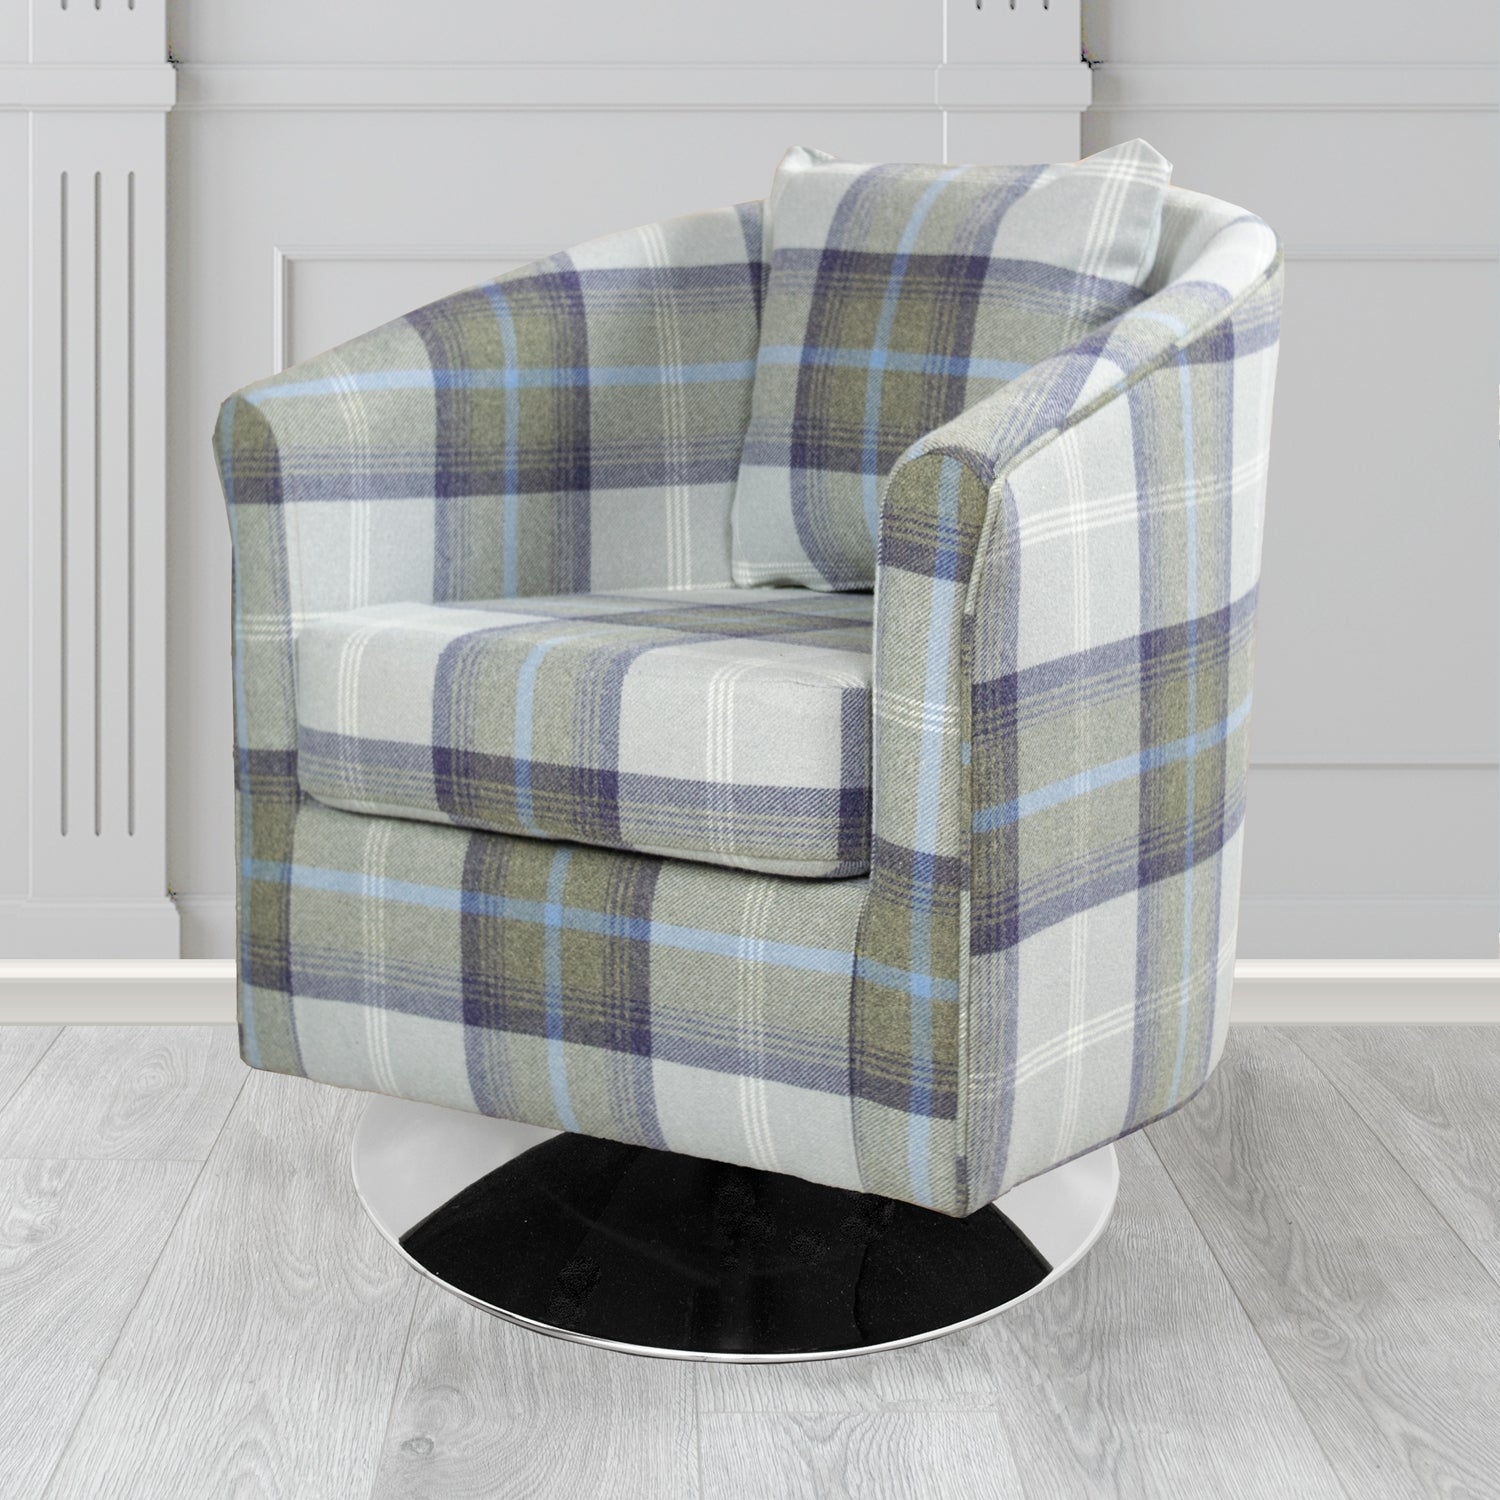 St Tropez Balmoral Oxford Blue Tartan Fabric Swivel Tub Chair with Scatter Cushion - The Tub Chair Shop